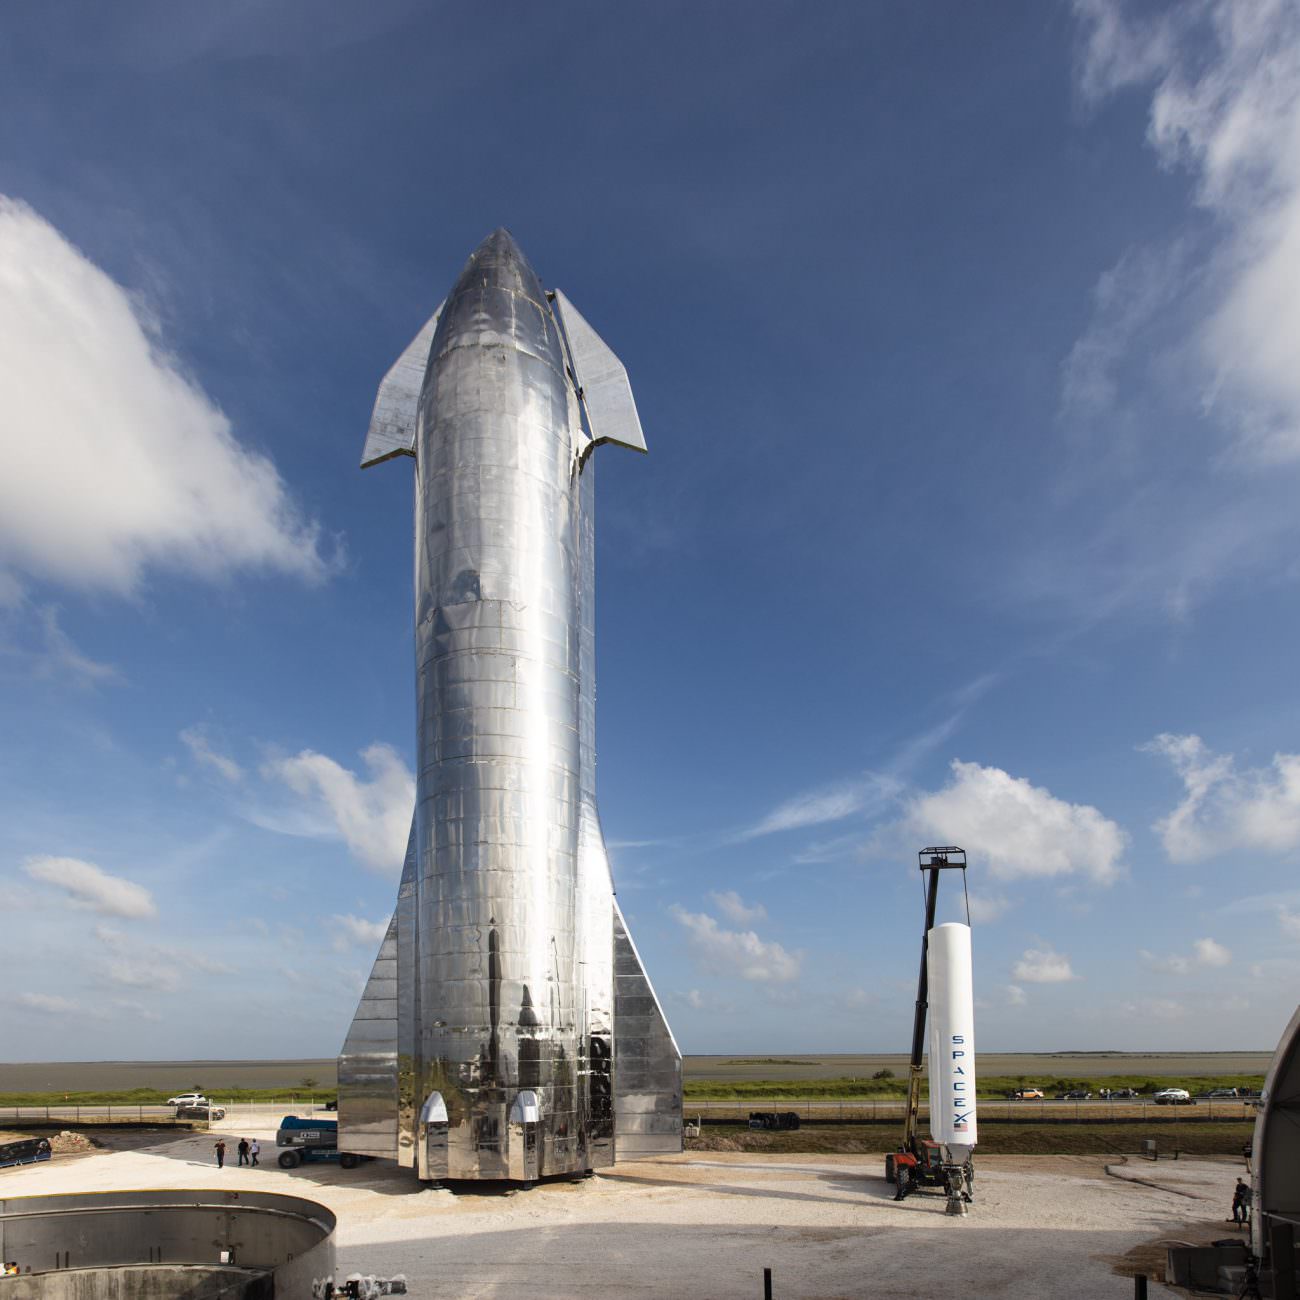 Spacexが大型宇宙船starshipの詳細を発表 週刊宇宙ビジネスニュース 9 23 9 29 宙畑